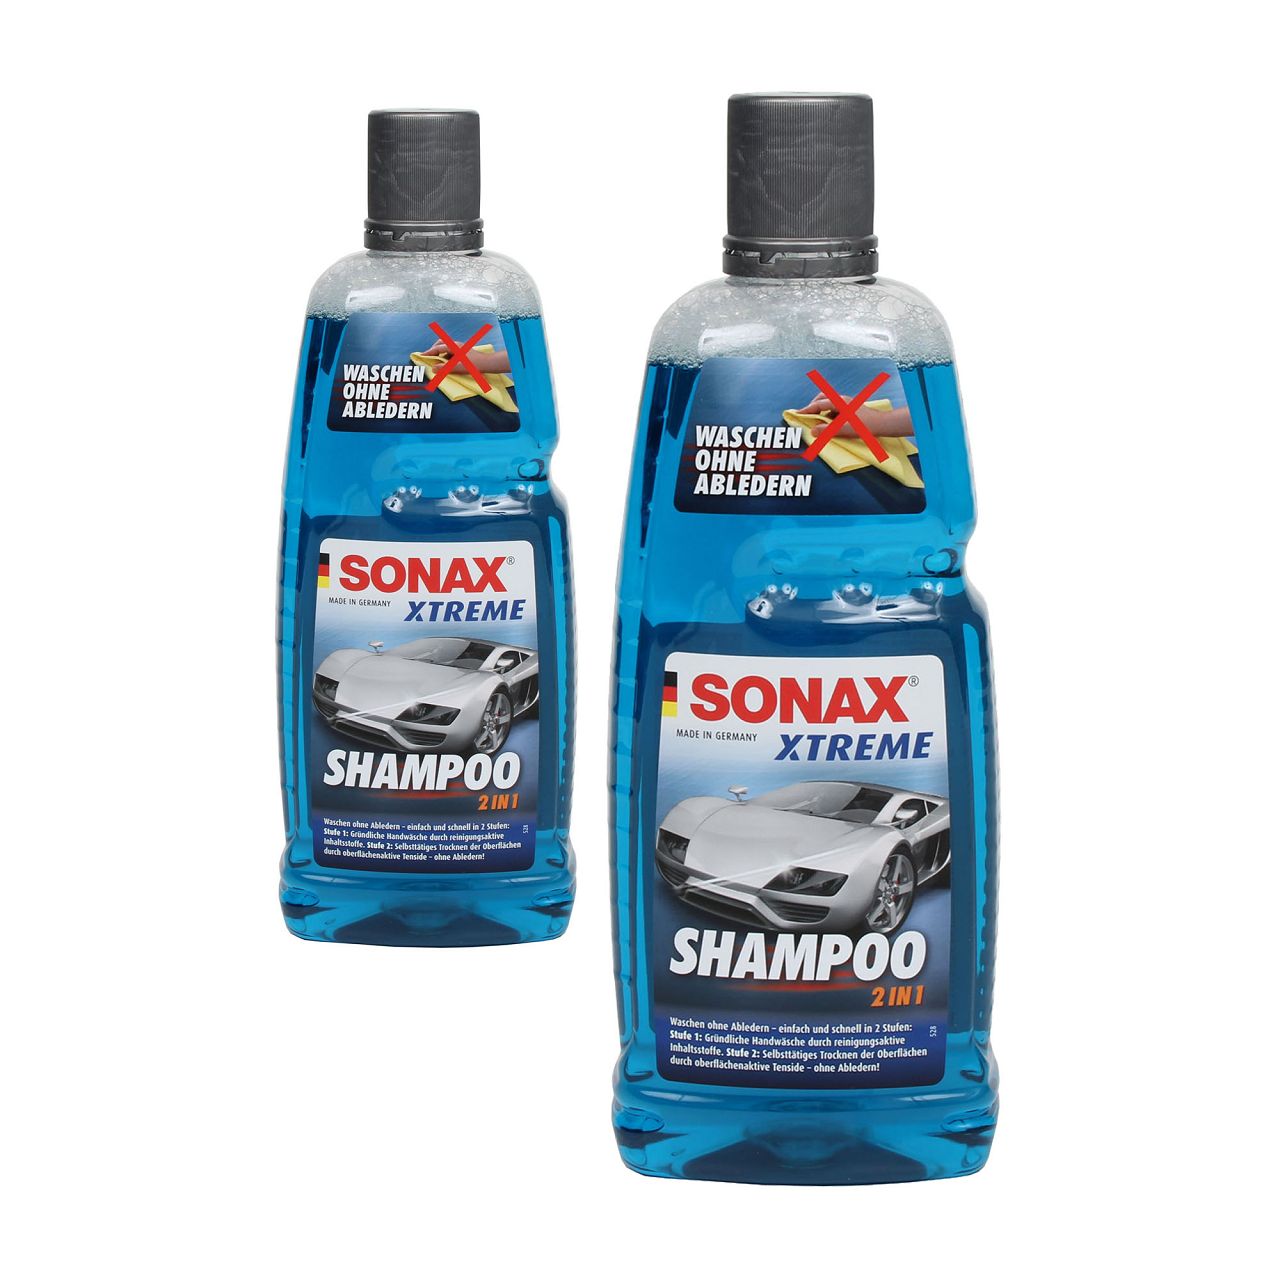 SONAX 215300 Xtreme Shampoo 2 in 1 ohne Abledern Autoshampoo 2L 2 Liter